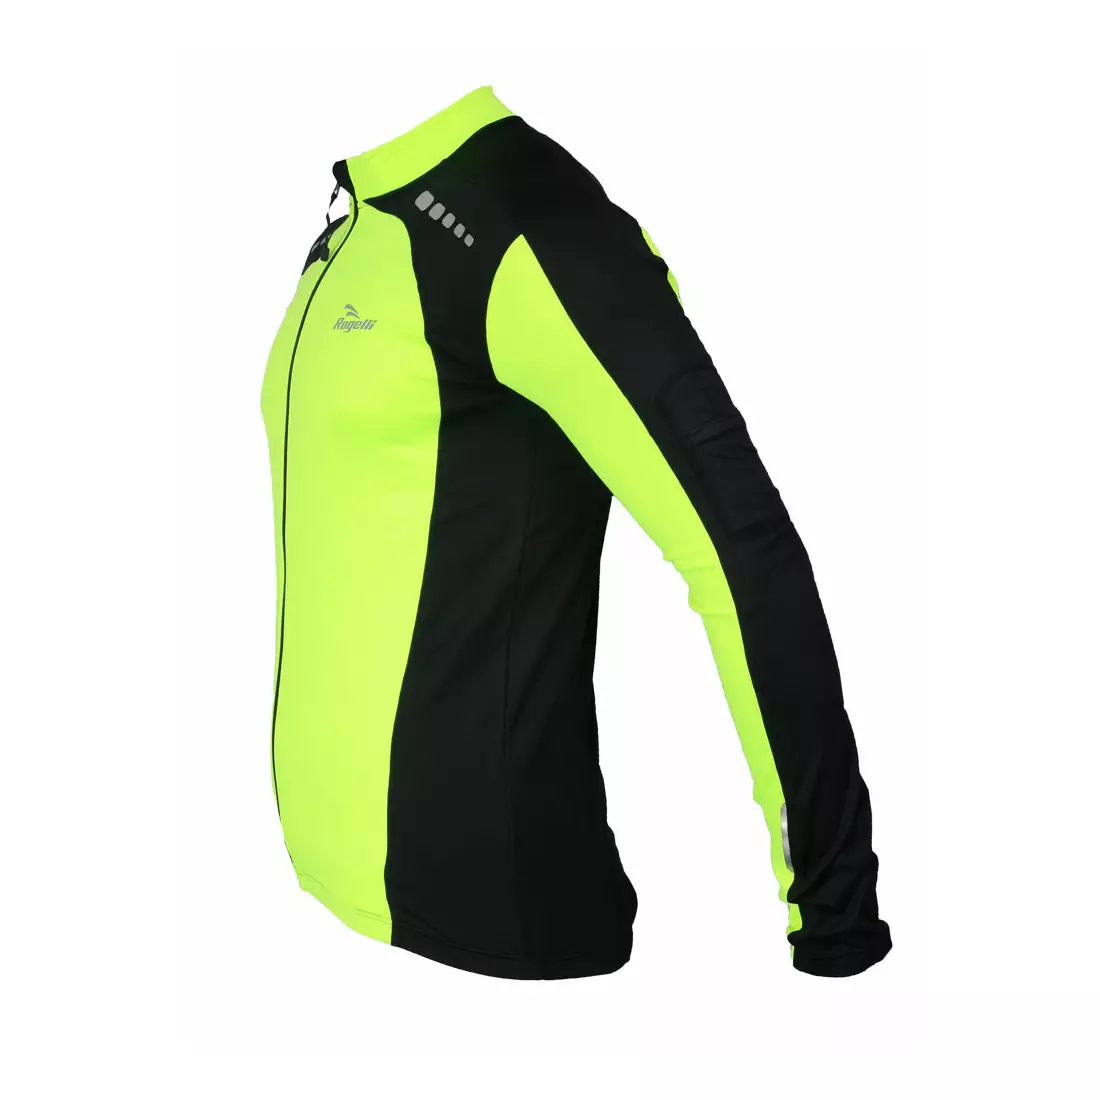 ROGELLI TREVISO - warmes Fahrrad-Sweatshirt, Farbe: Fluor